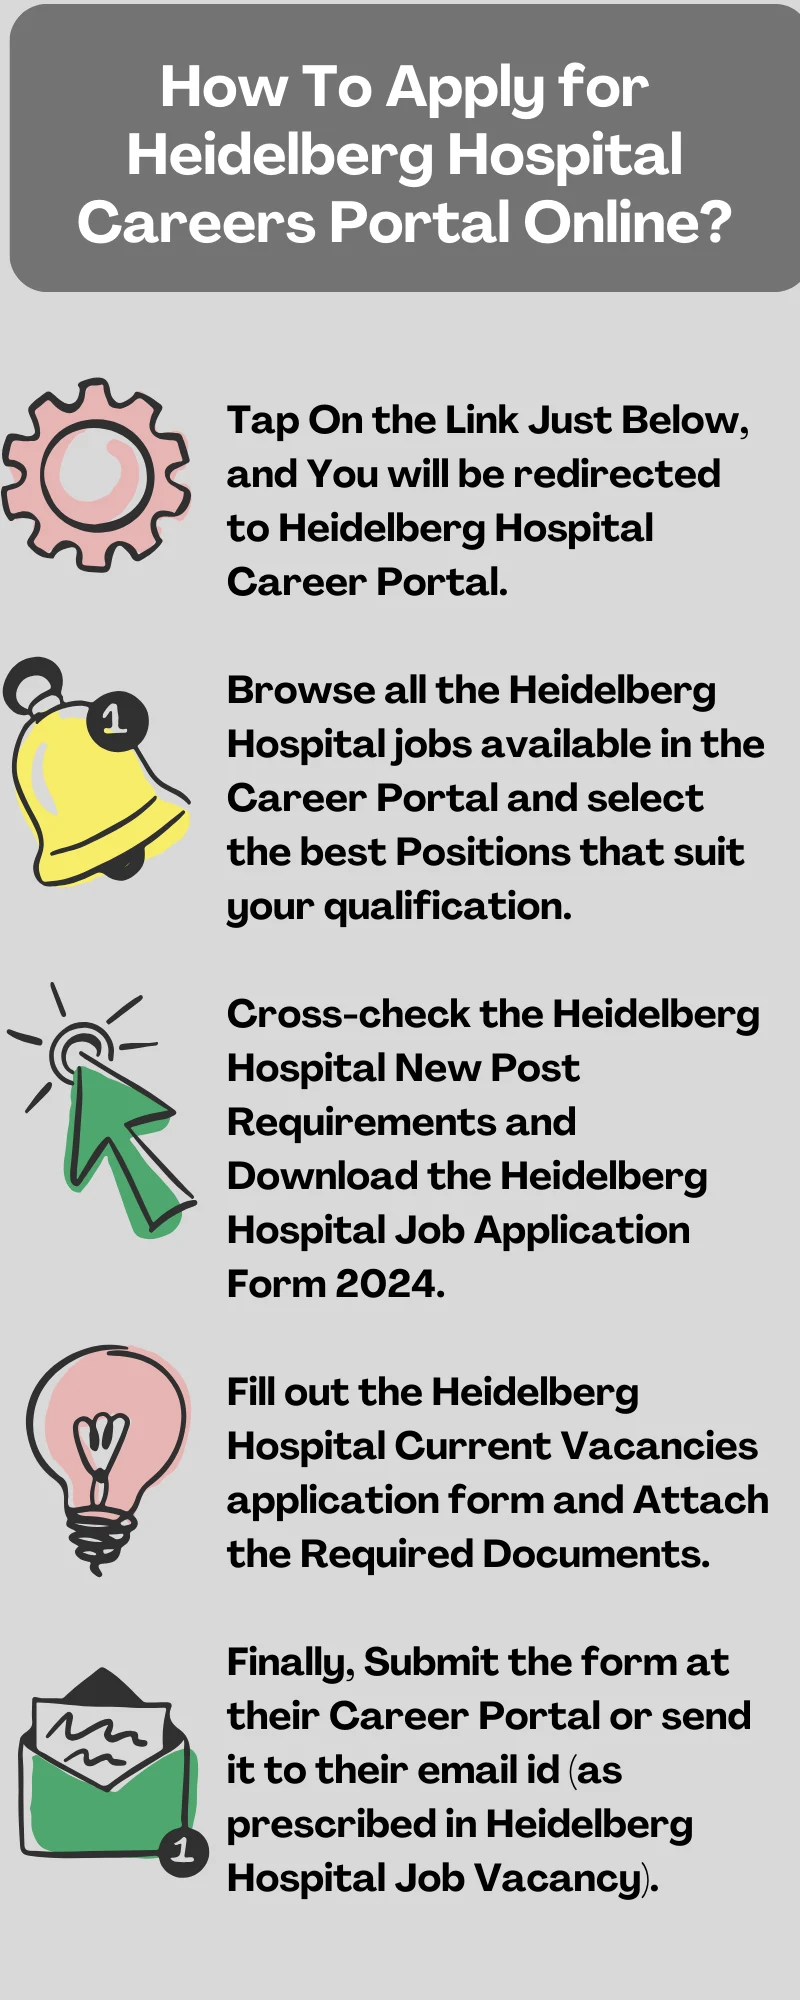 How To Apply for Heidelberg Hospital Careers Portal Online?